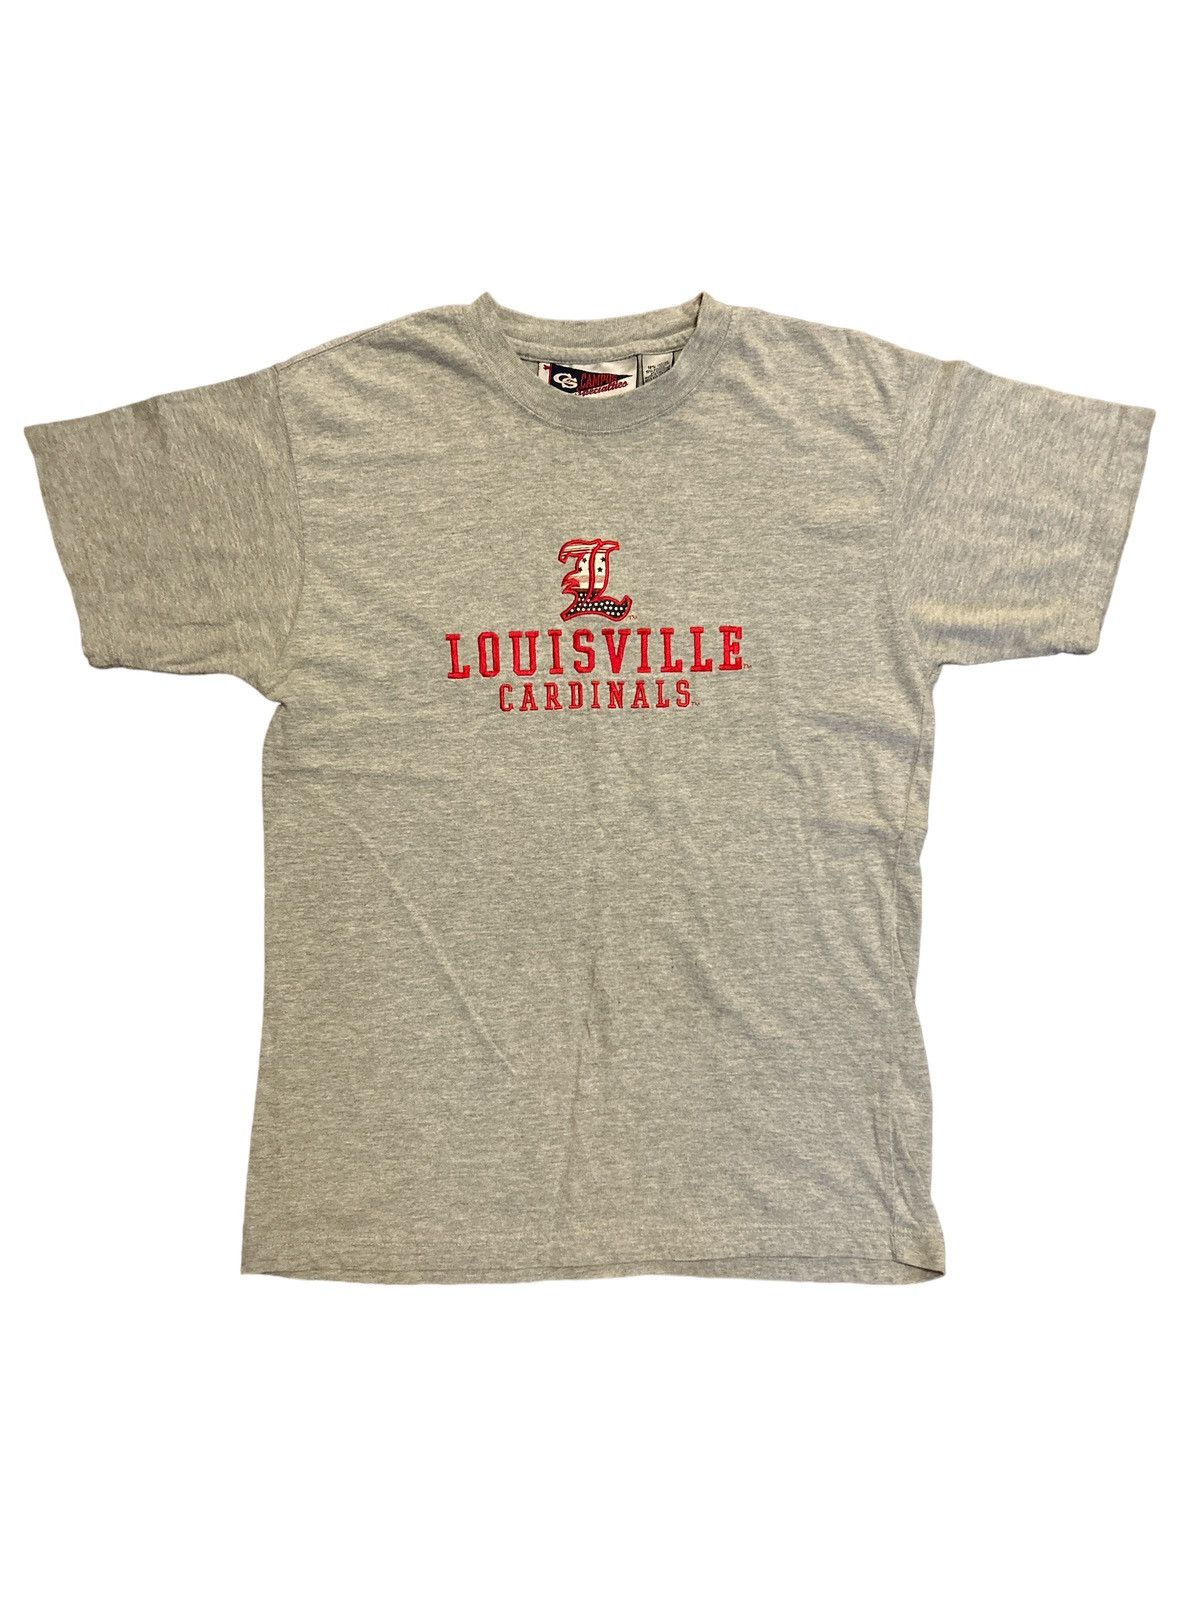 NBA Vintage Rare 90s AOP Louisville Basketball T Shirt Cardinals